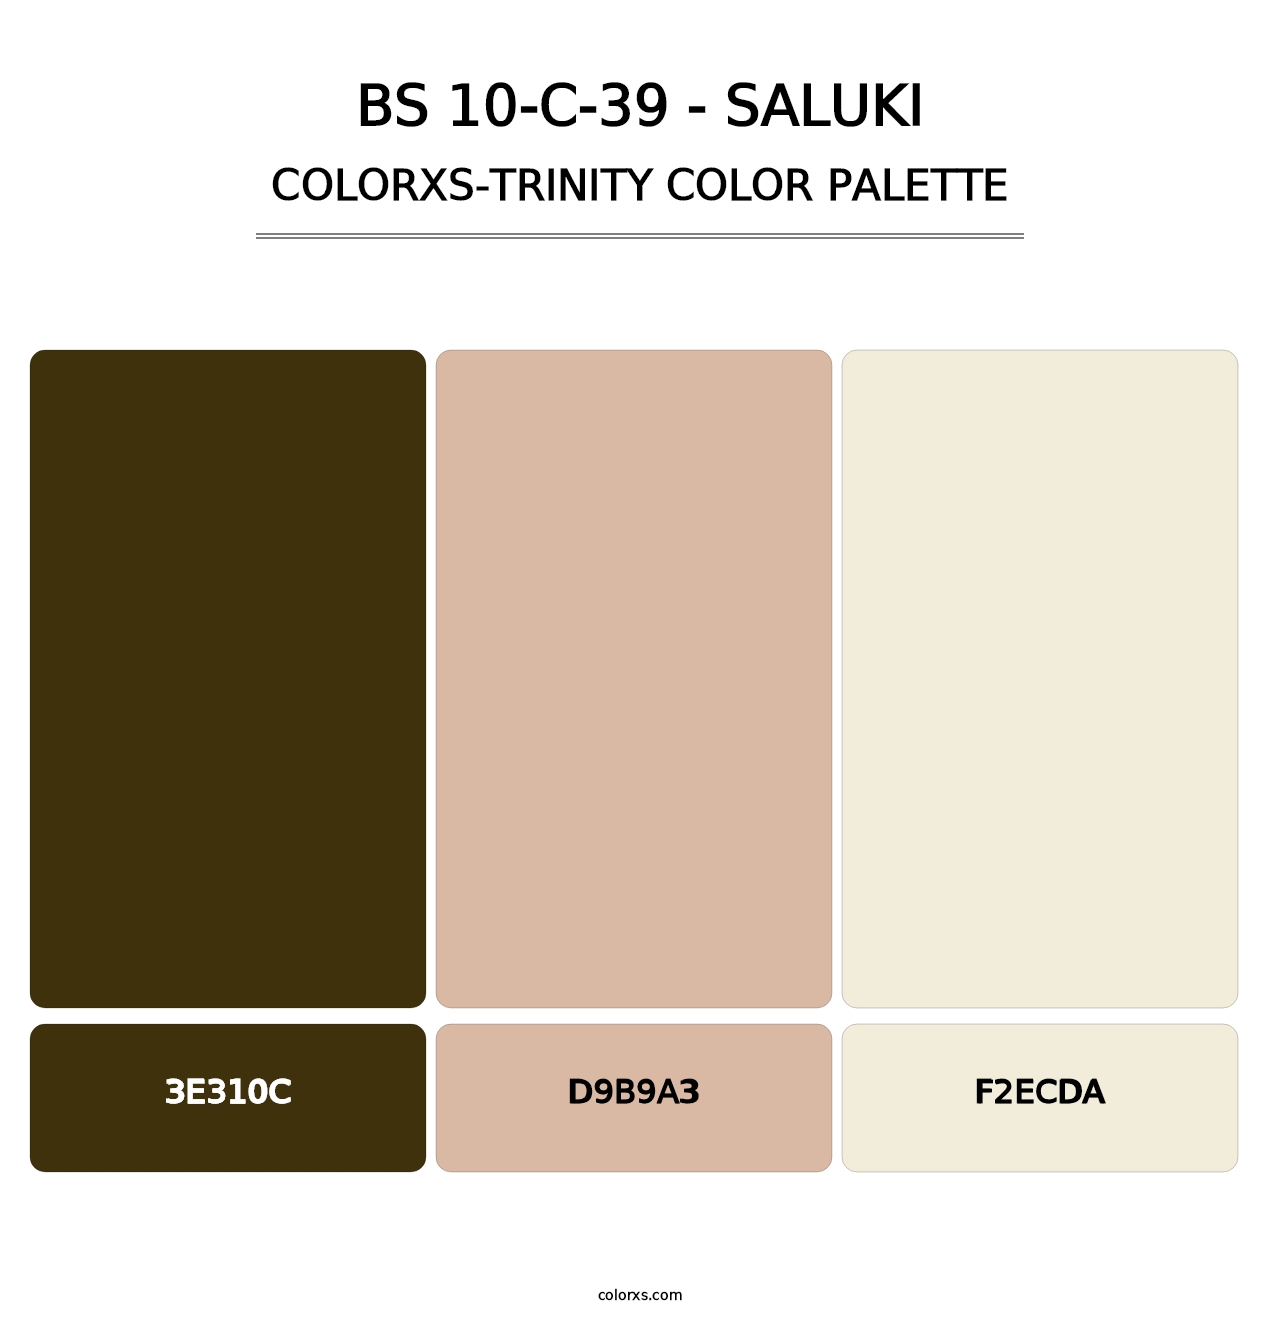 BS 10-C-39 - Saluki - Colorxs Trinity Palette